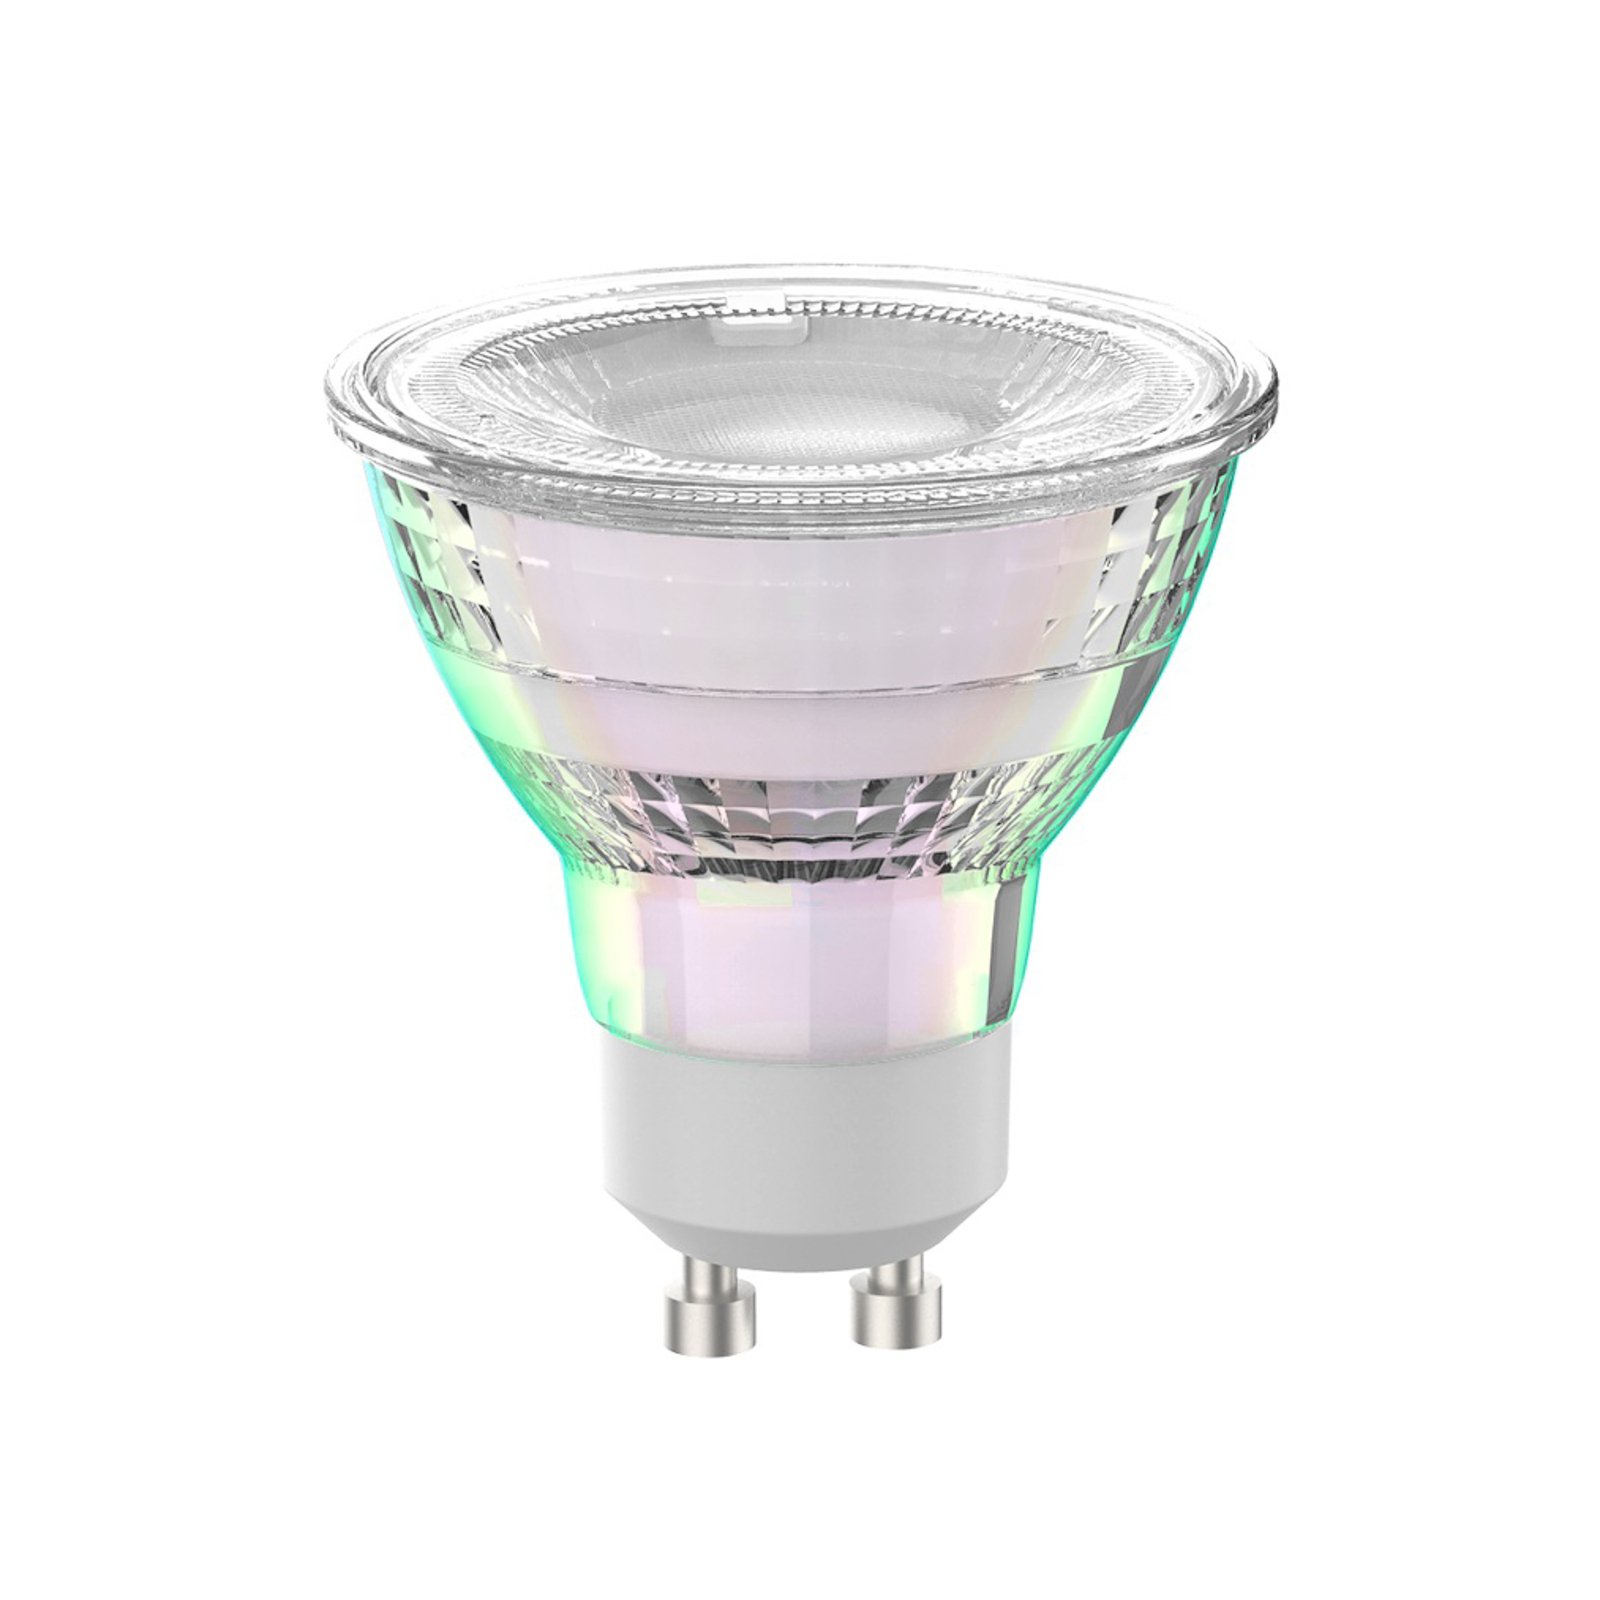 "Arcchio" LED lemputė GU10 2,5W 6500K 450lm stiklo rinkinys, 3 vnt